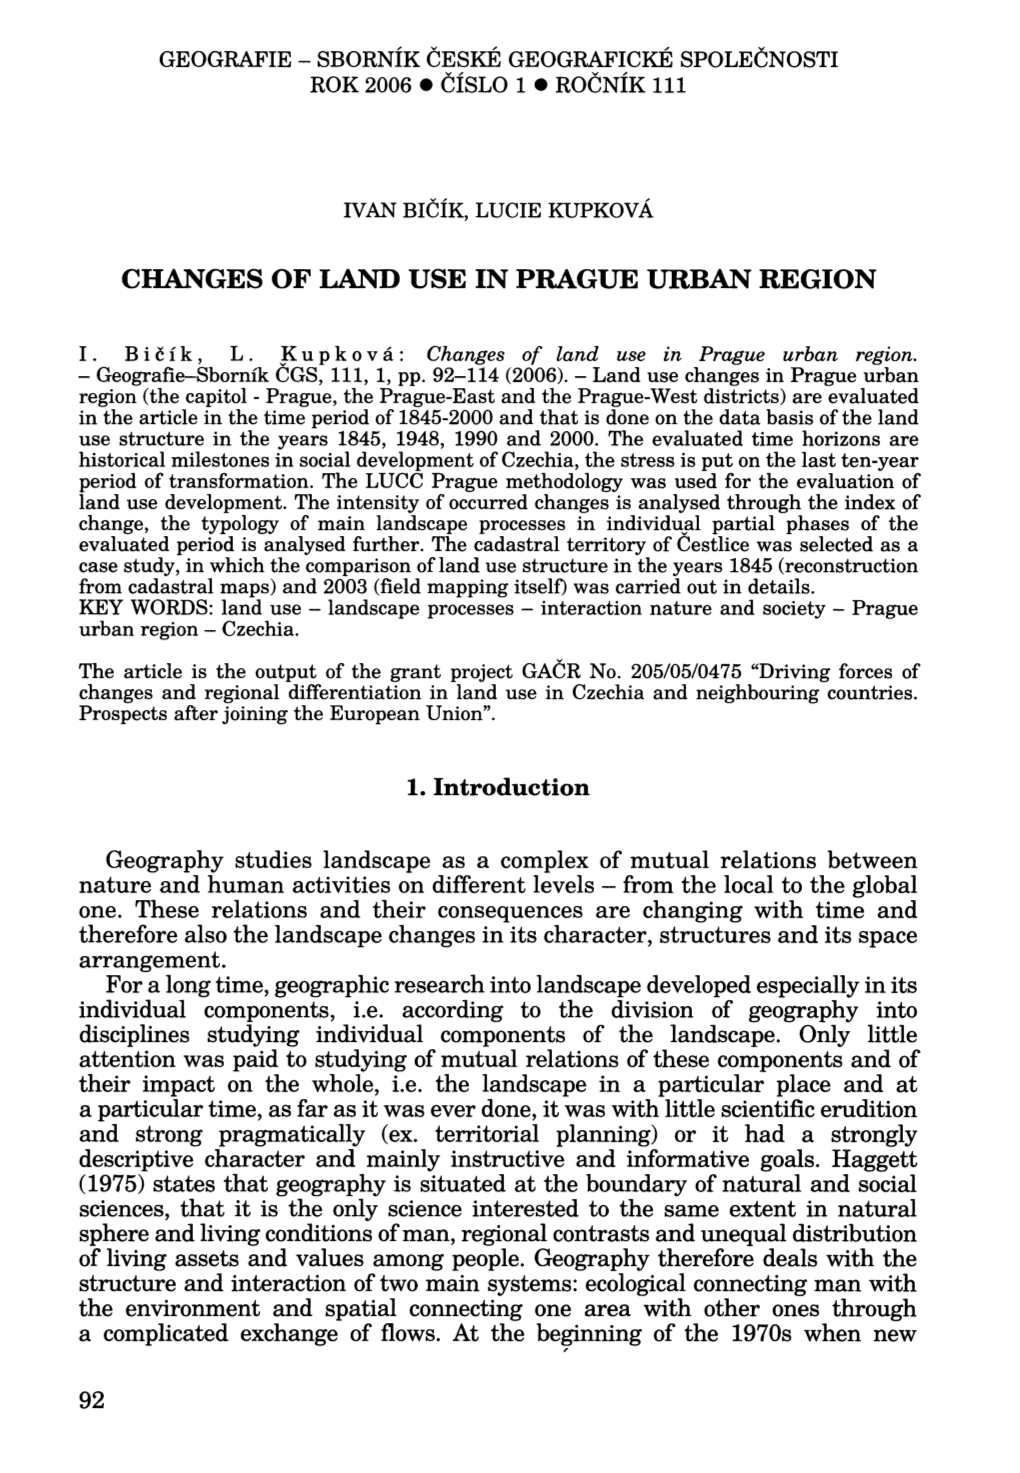 Changes of Land Use in Prague Urban Region